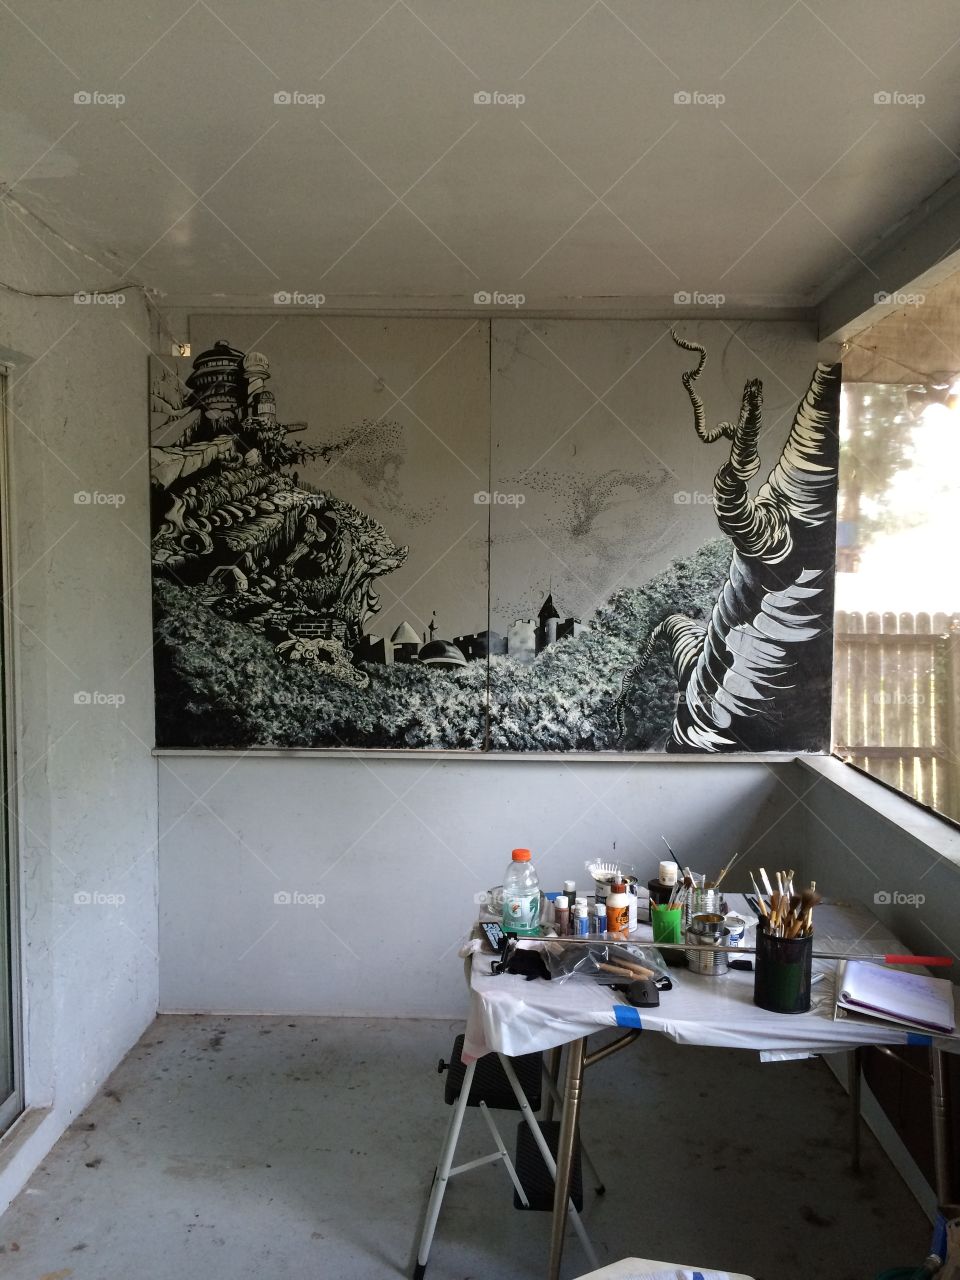 Work in progress, 5'x8' mural